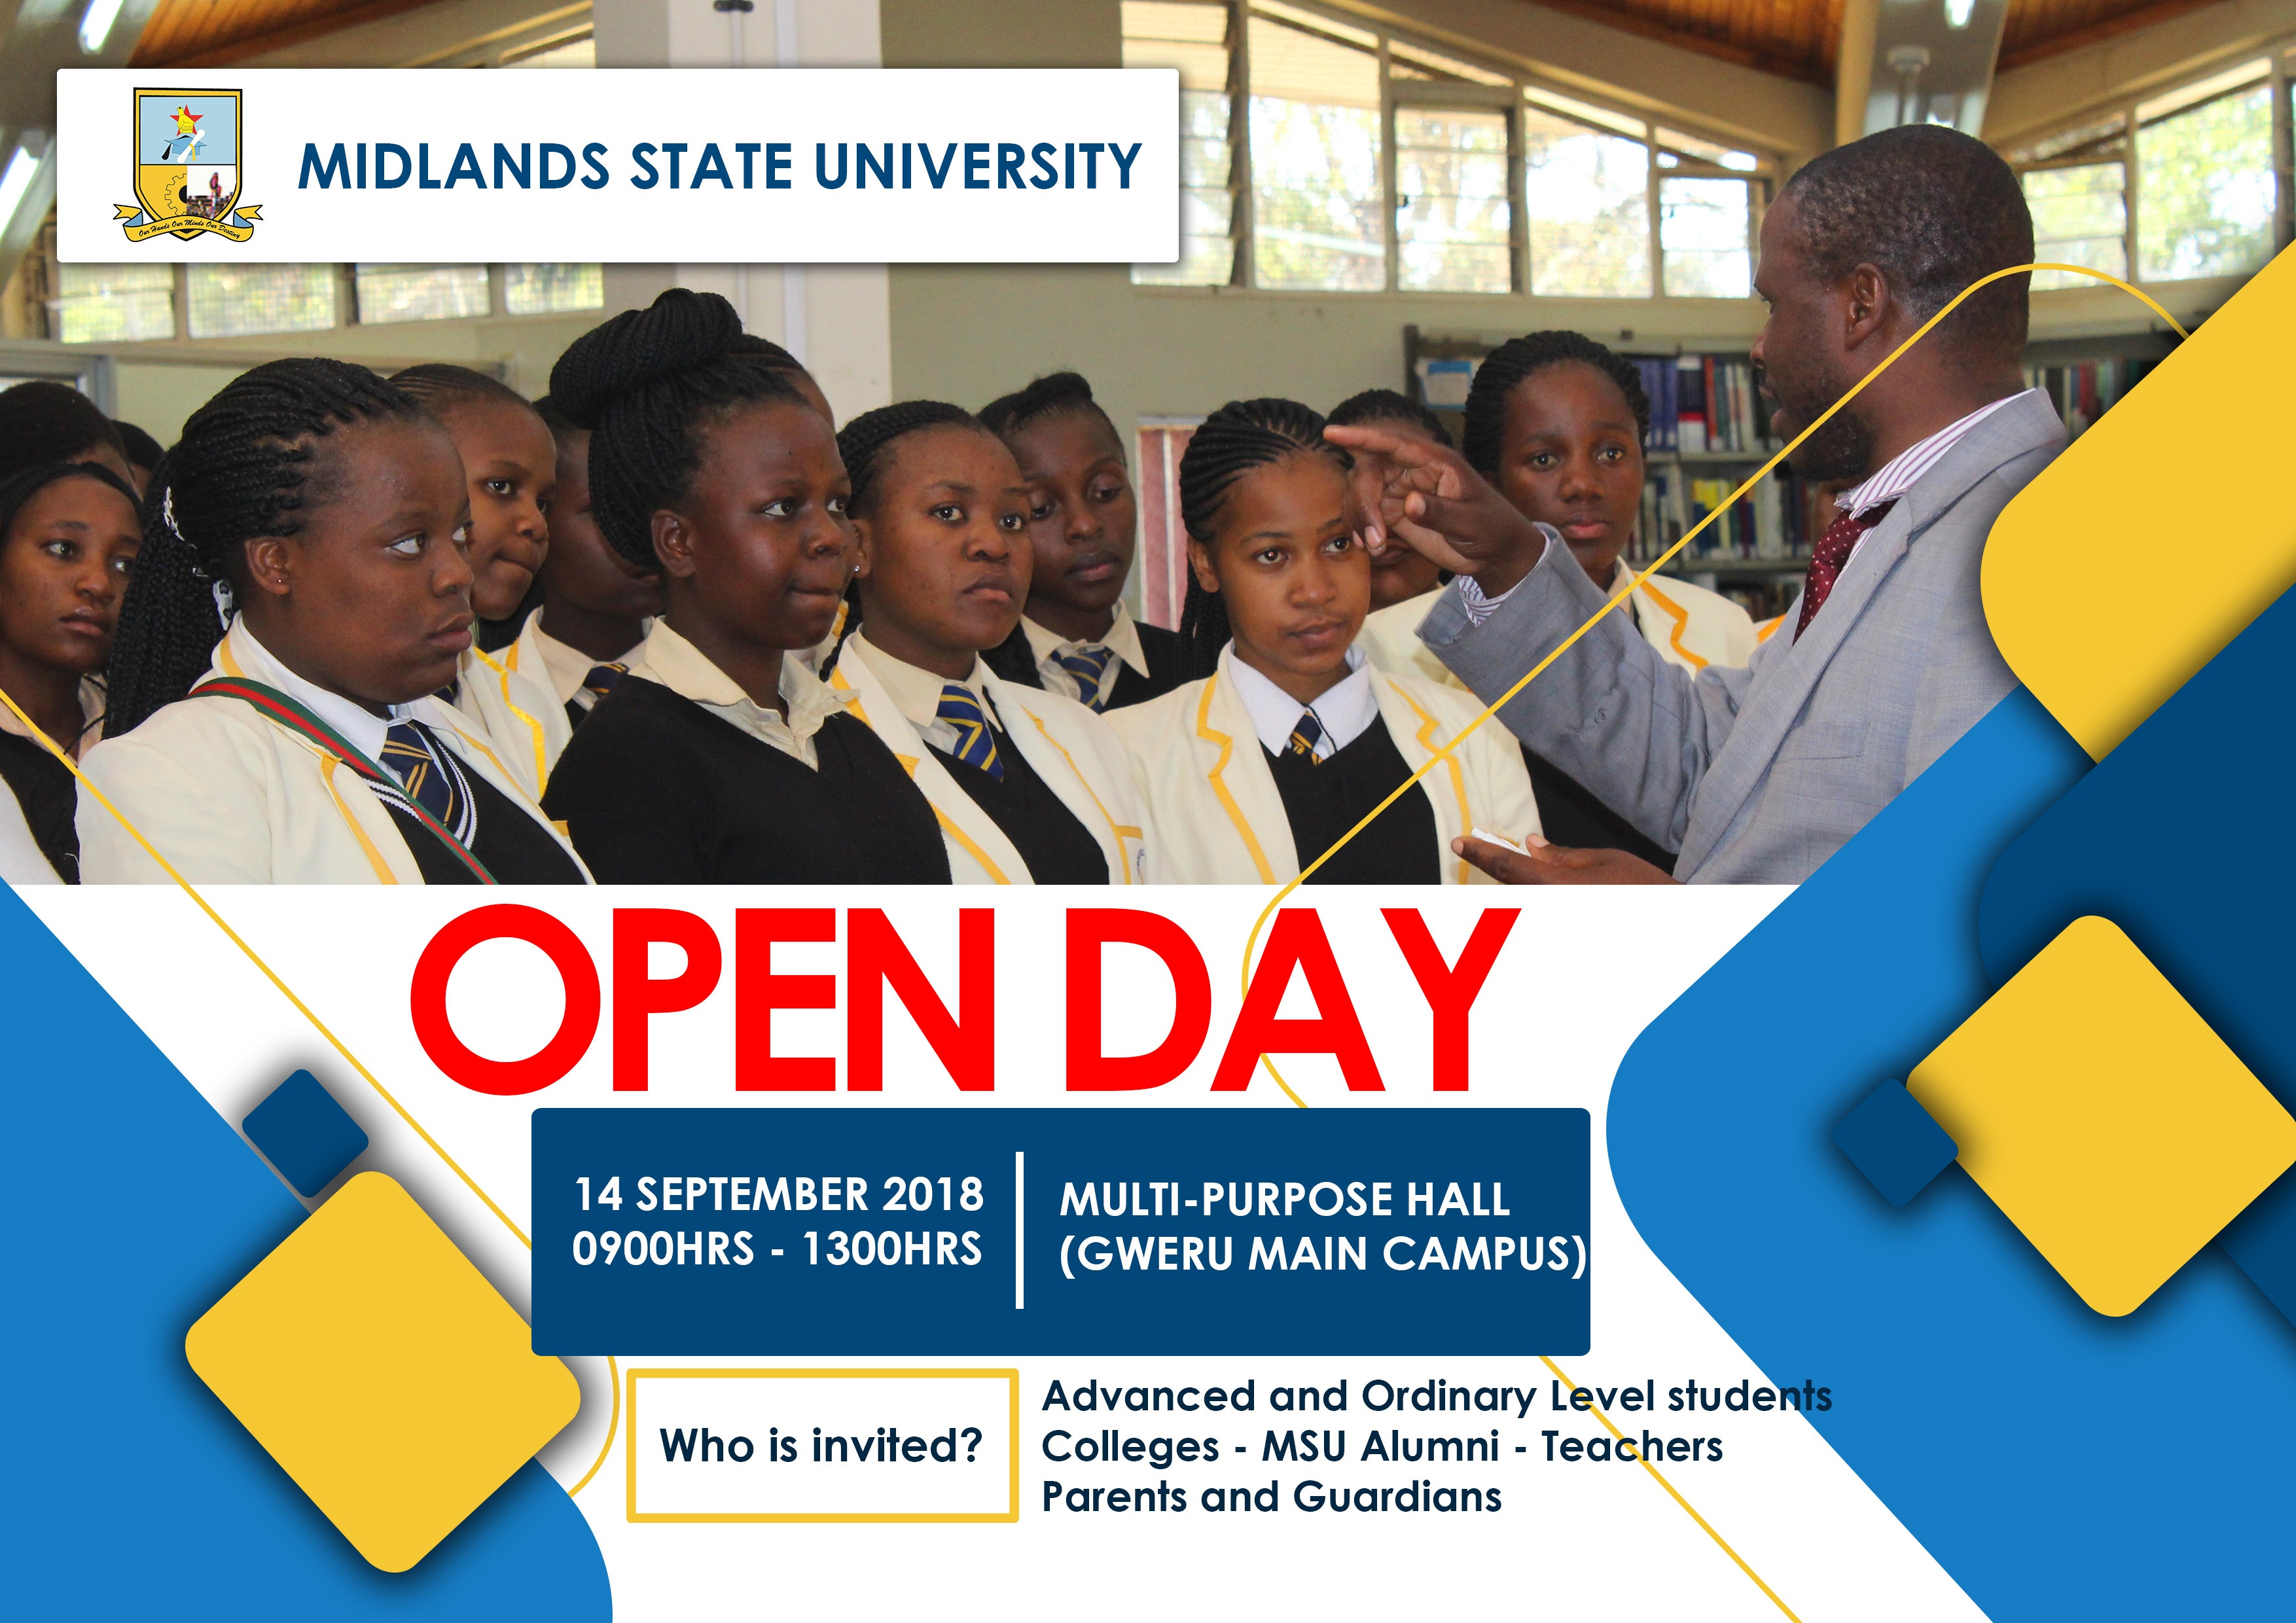 MSU 2018 Open Day Midlands State University